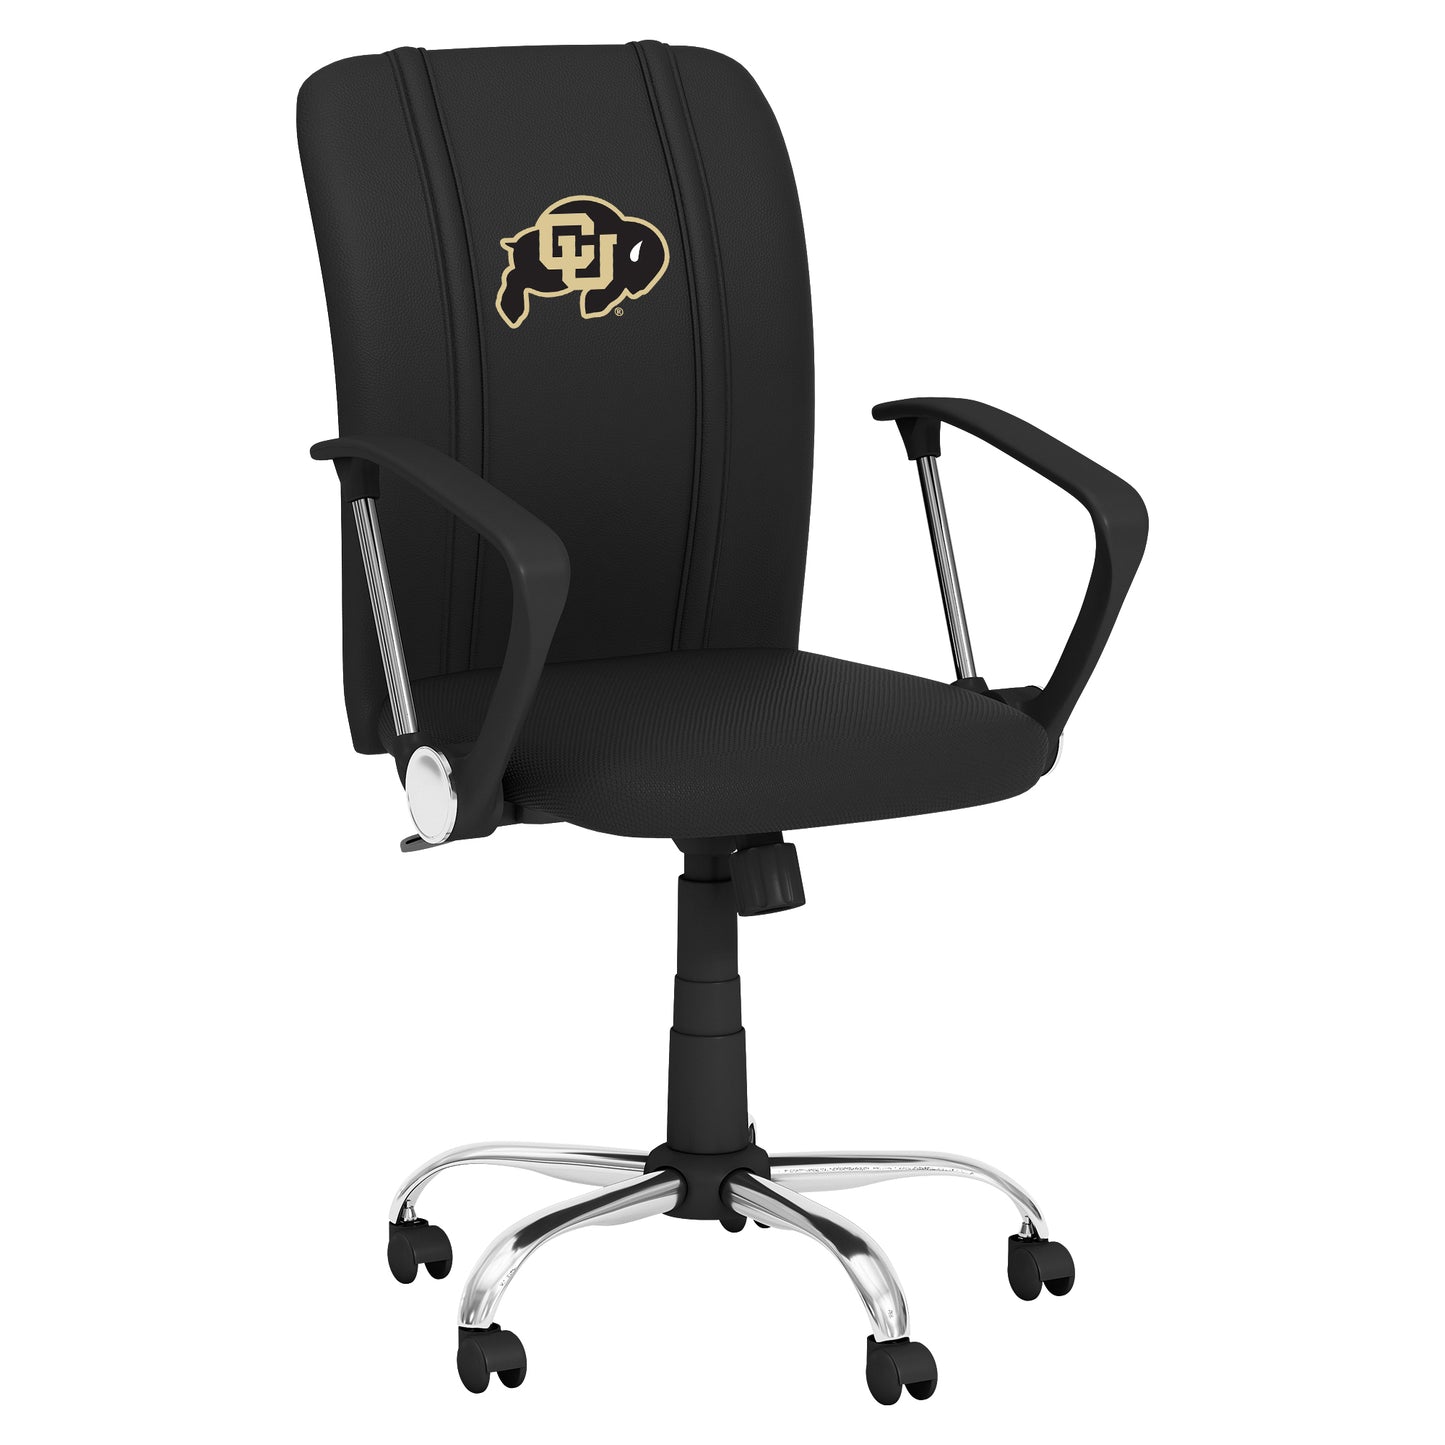 Curve Task Chair with Colorado Buffaloes Logo